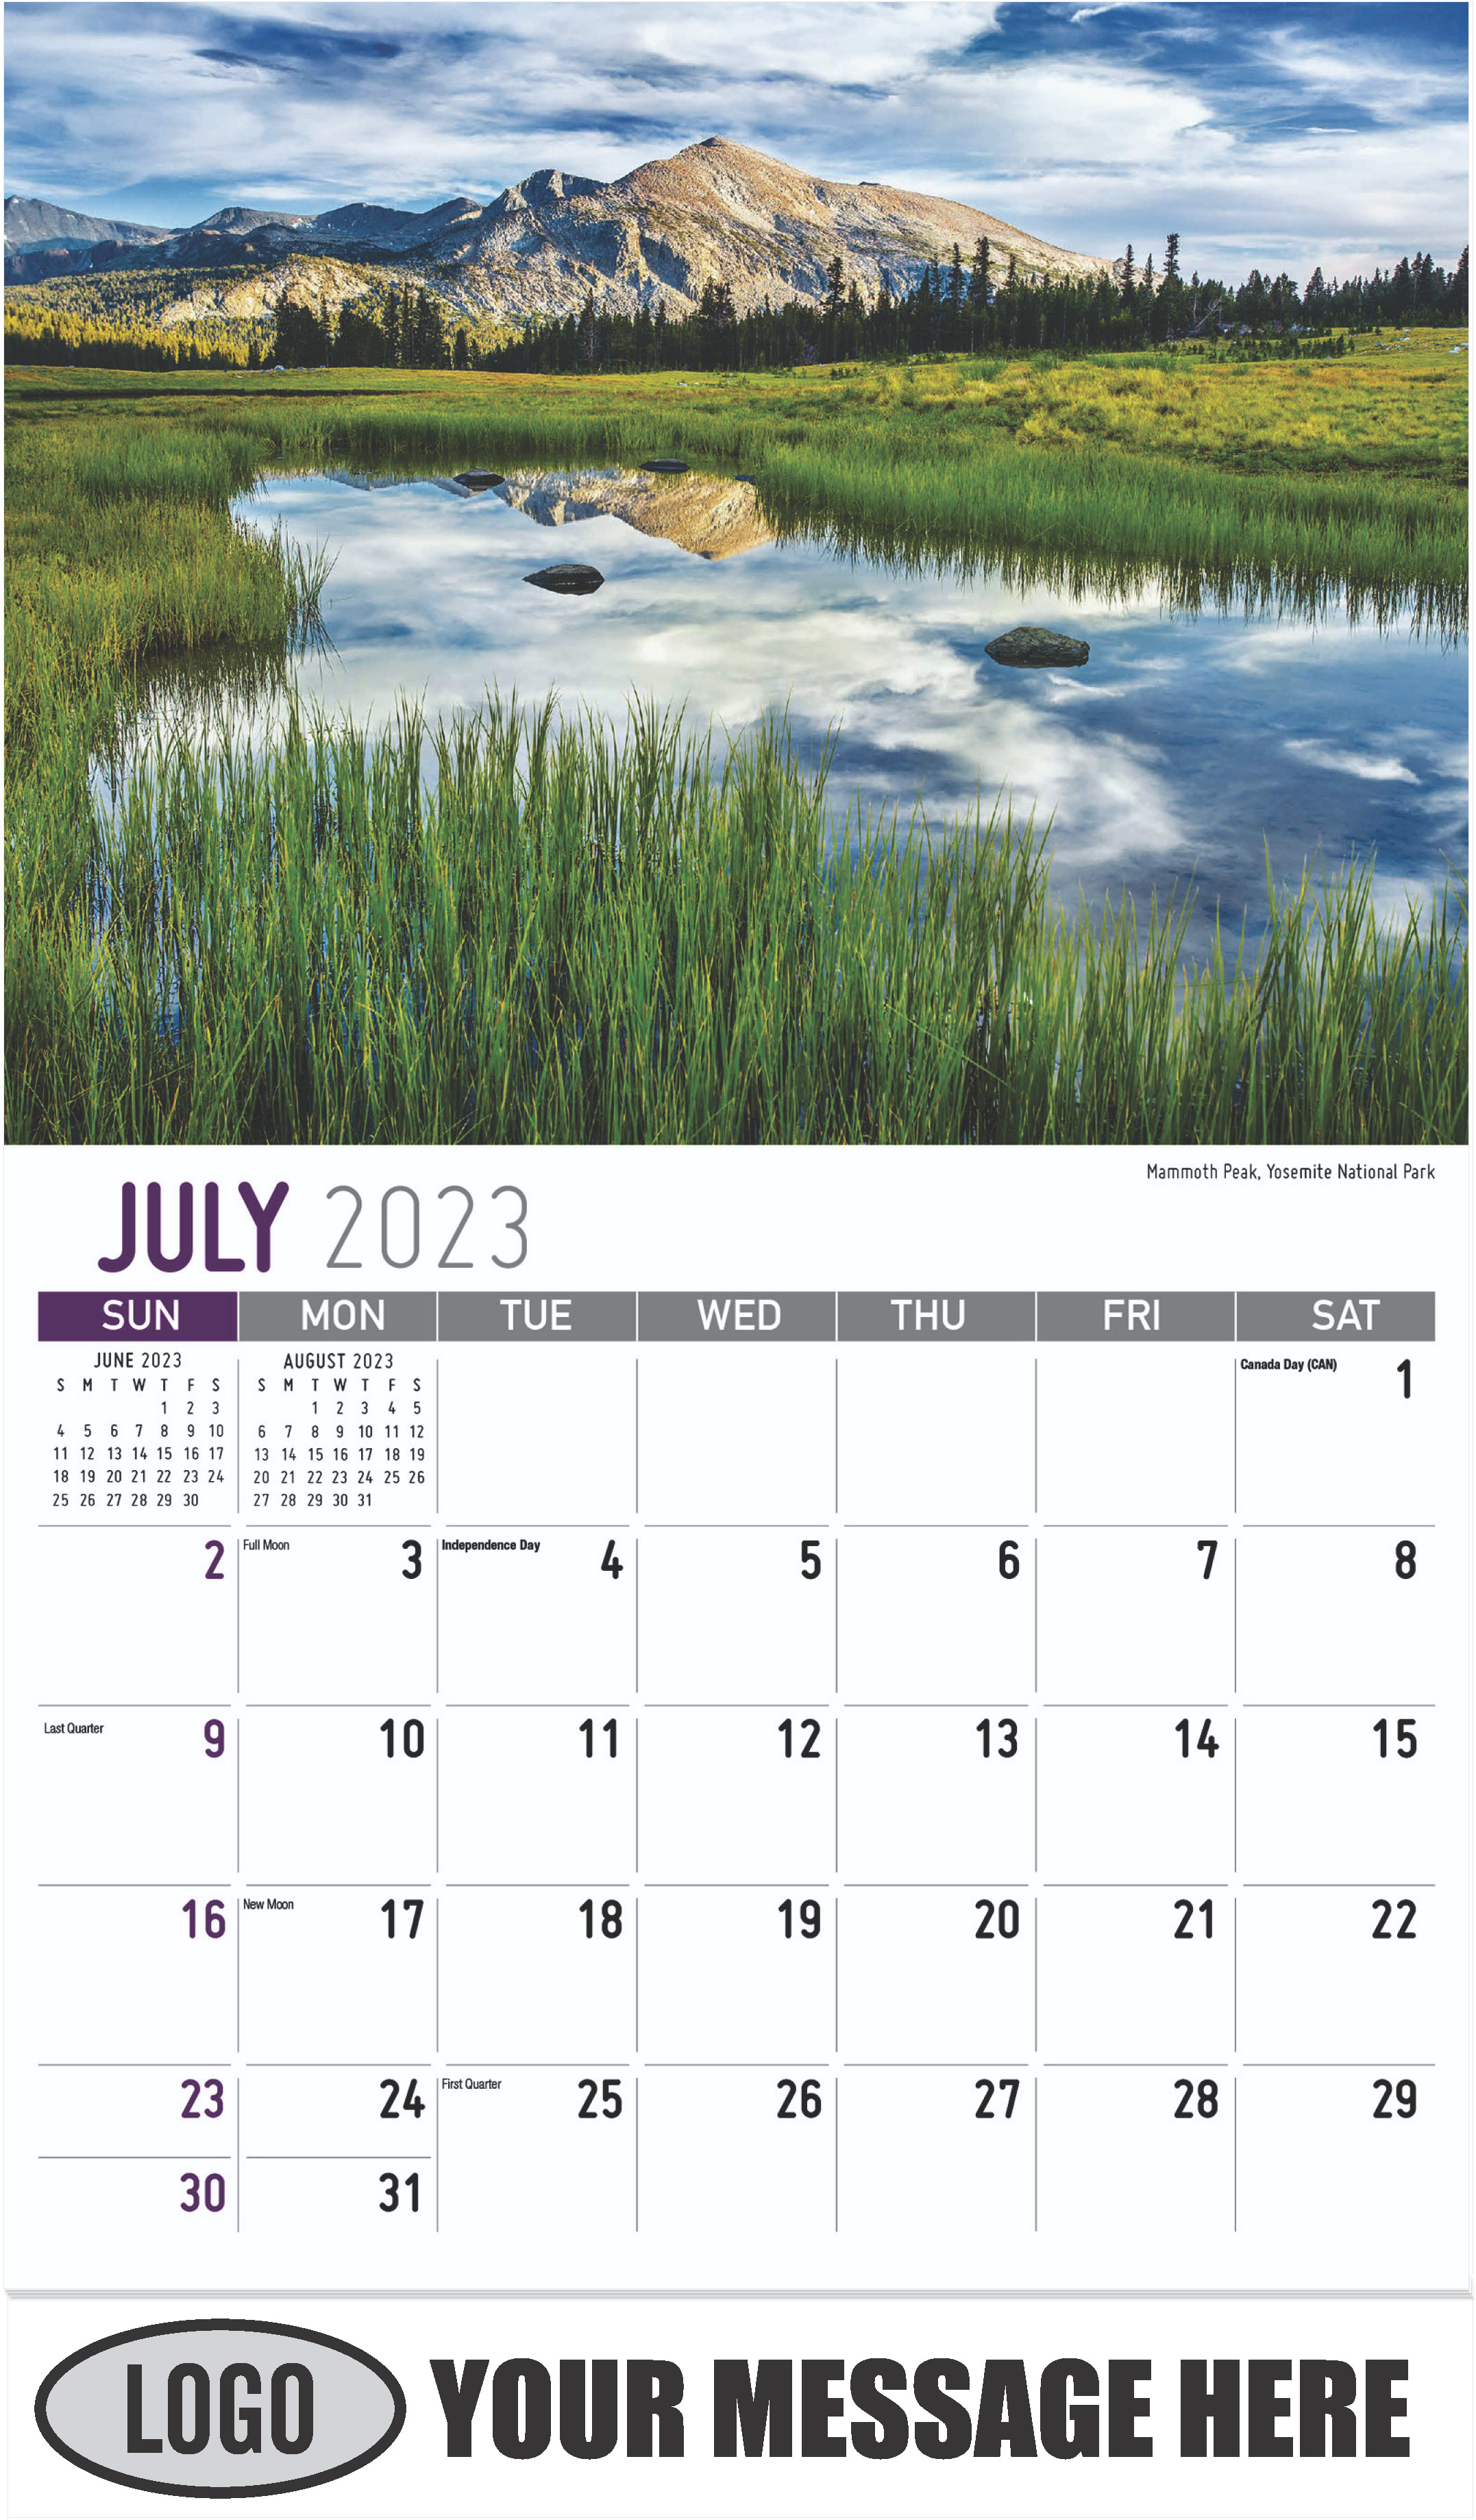 Mammoth Peak, Yosemite National Park - July - Scenes of California 2023 Promotional Calendar